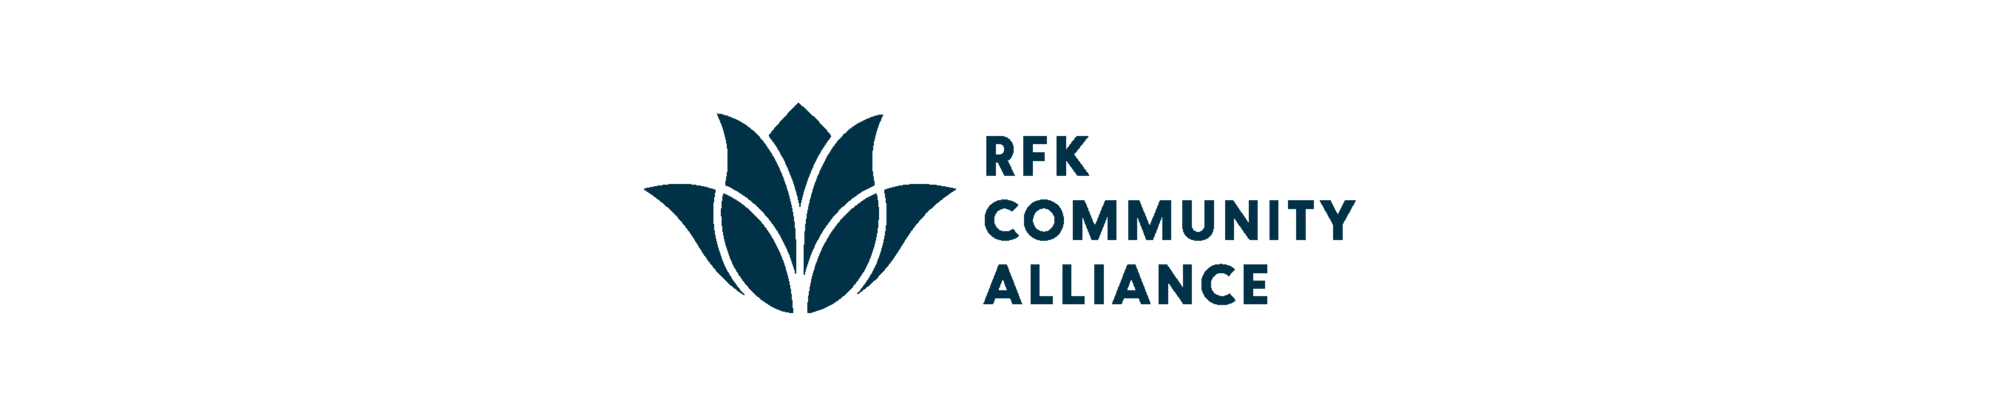 RFK Community Alliance Logo